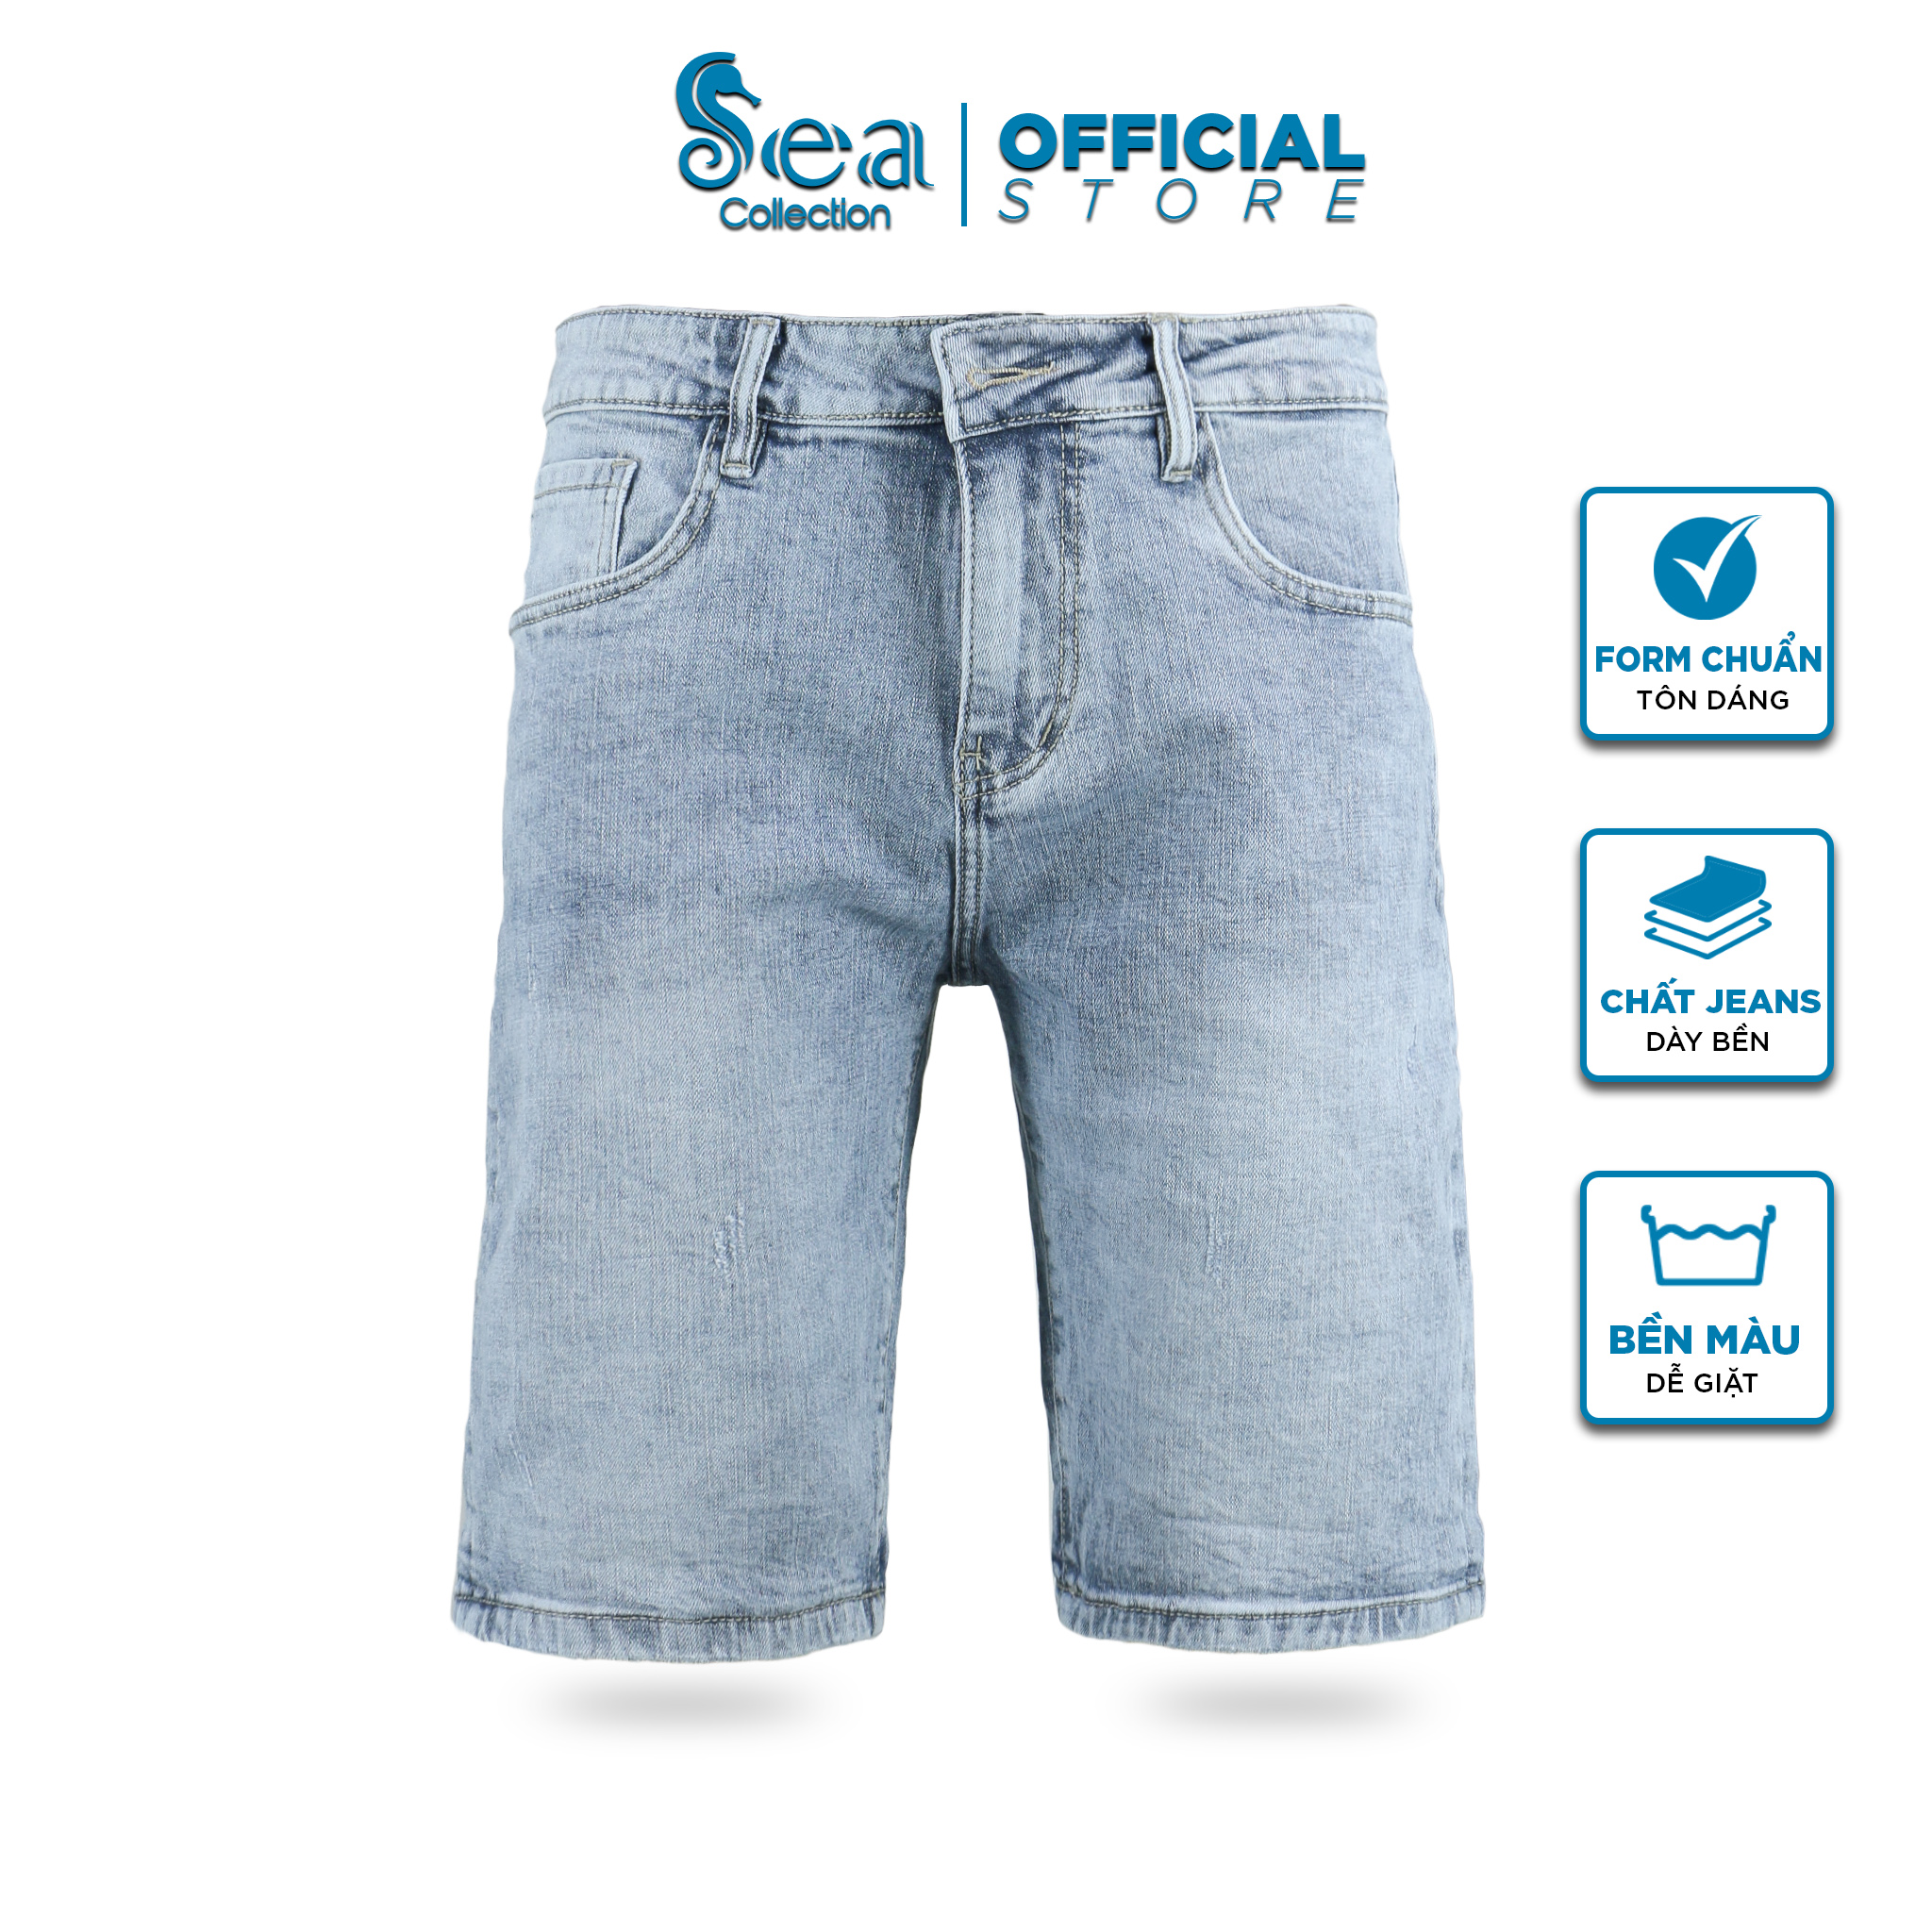 Quần Short Jeans Nam Sea Collection 7062